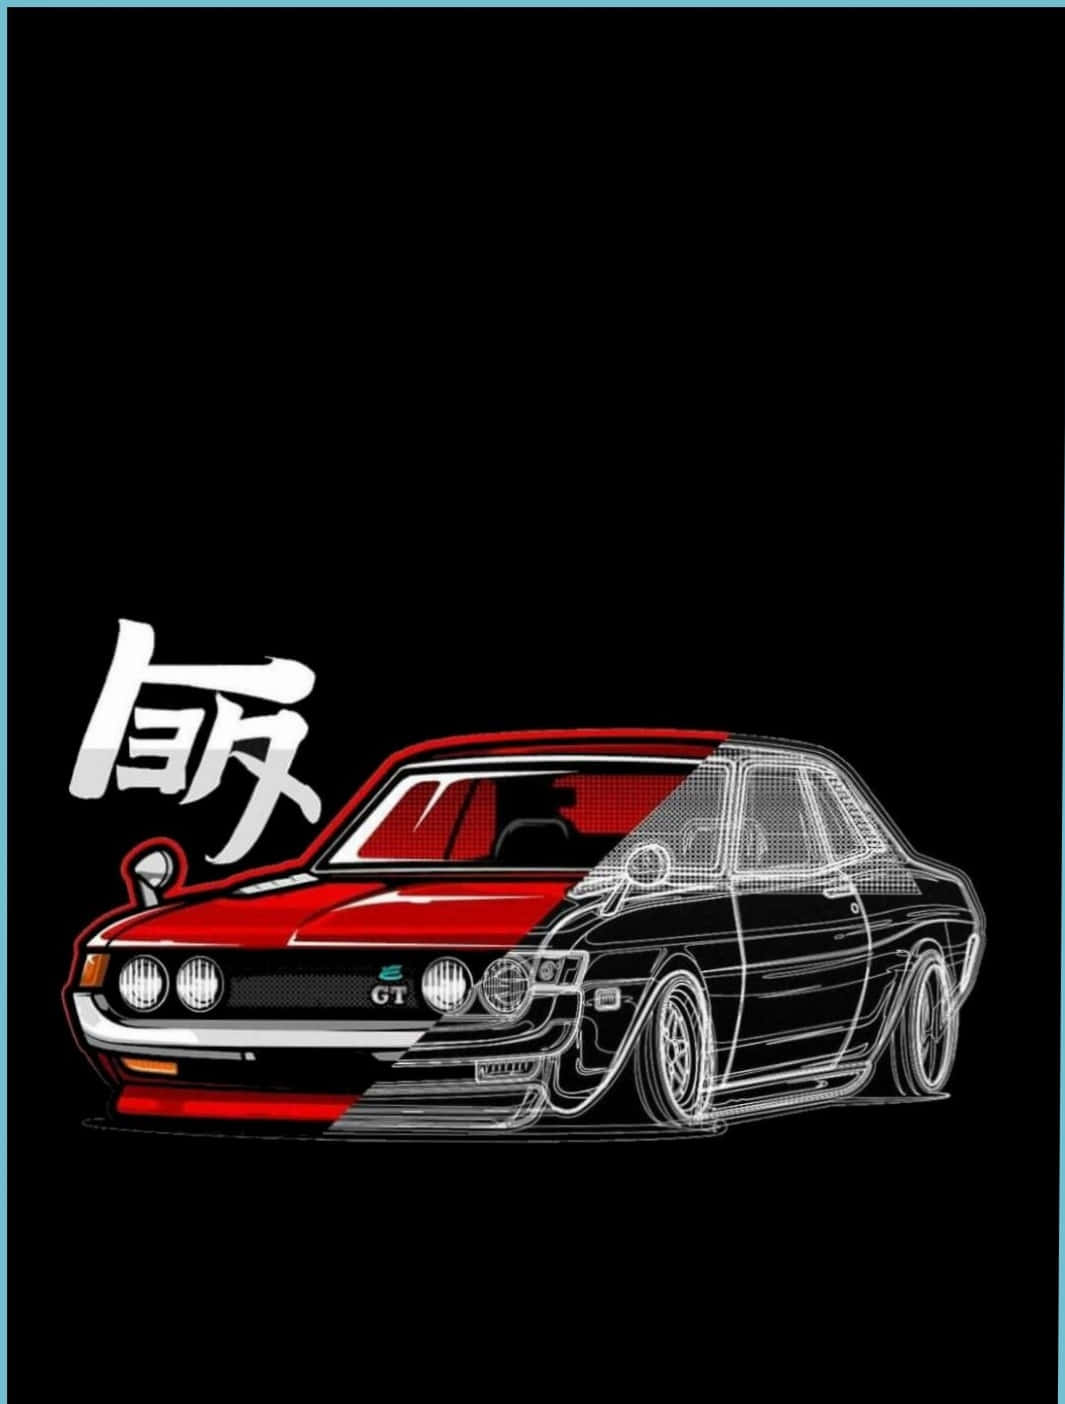 Jdm Art Retro Car Black Red Wallpaper